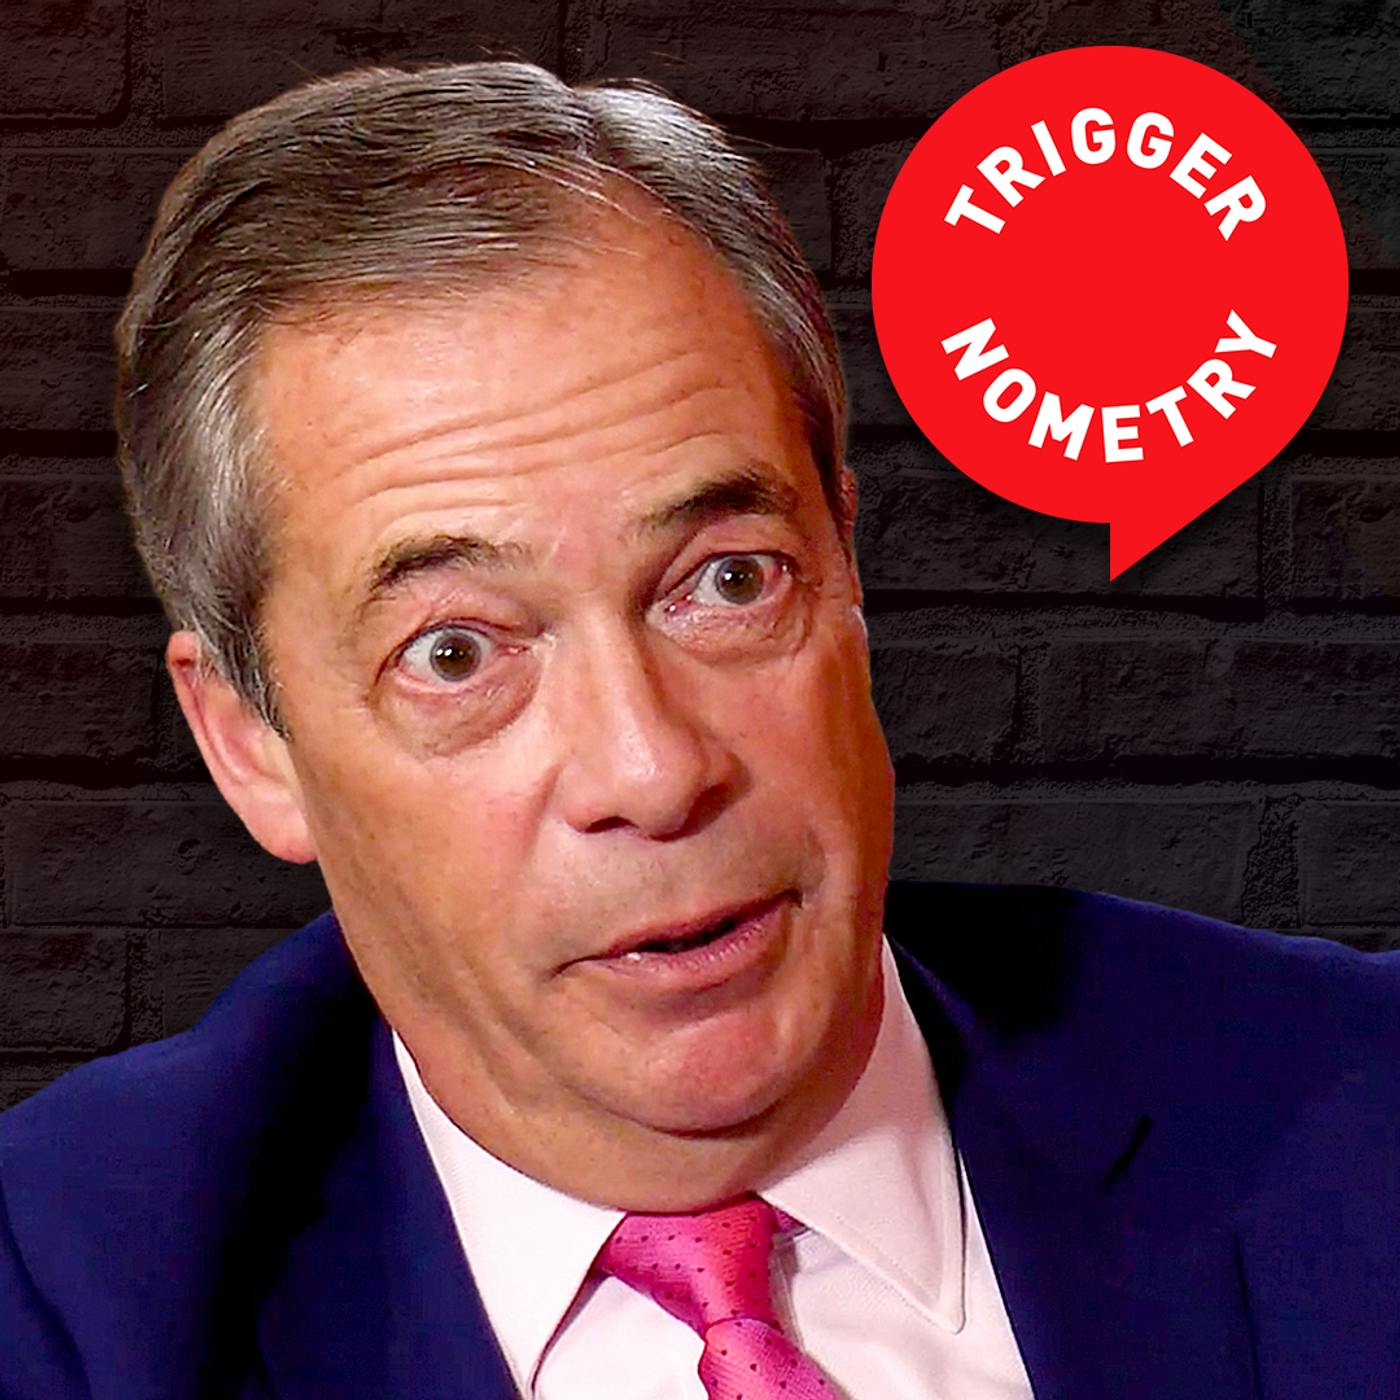 Nigel Farage: ”We’re Heading for a Political Revolution”